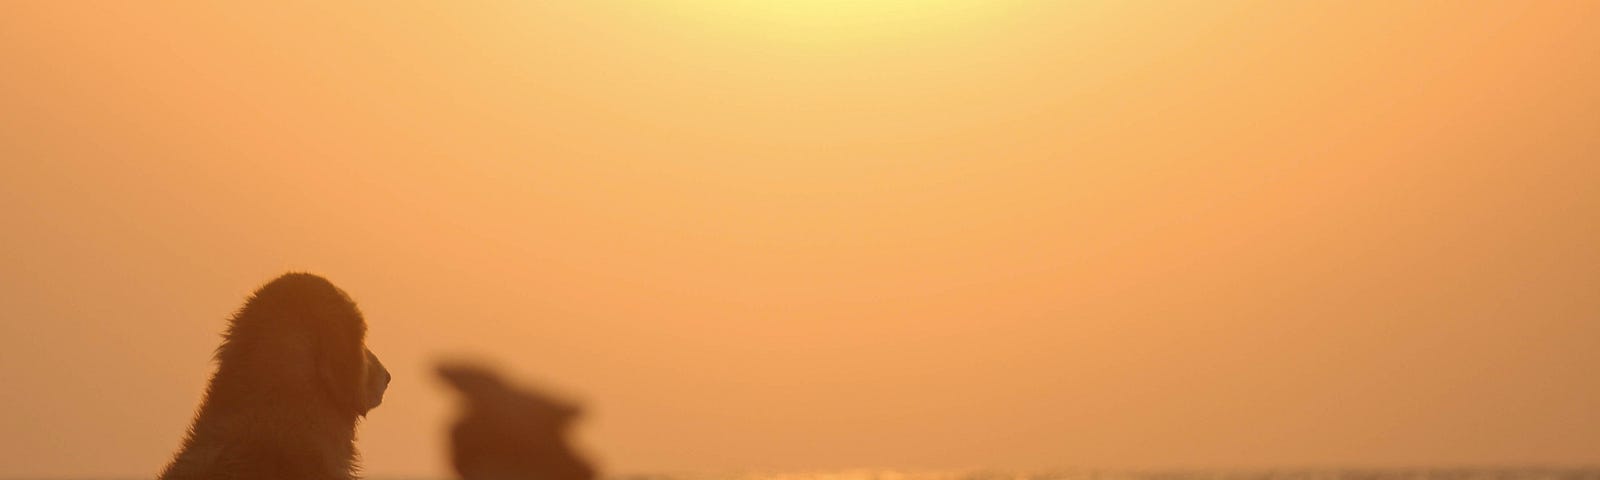 Golden retriever sitting on beach during sunset